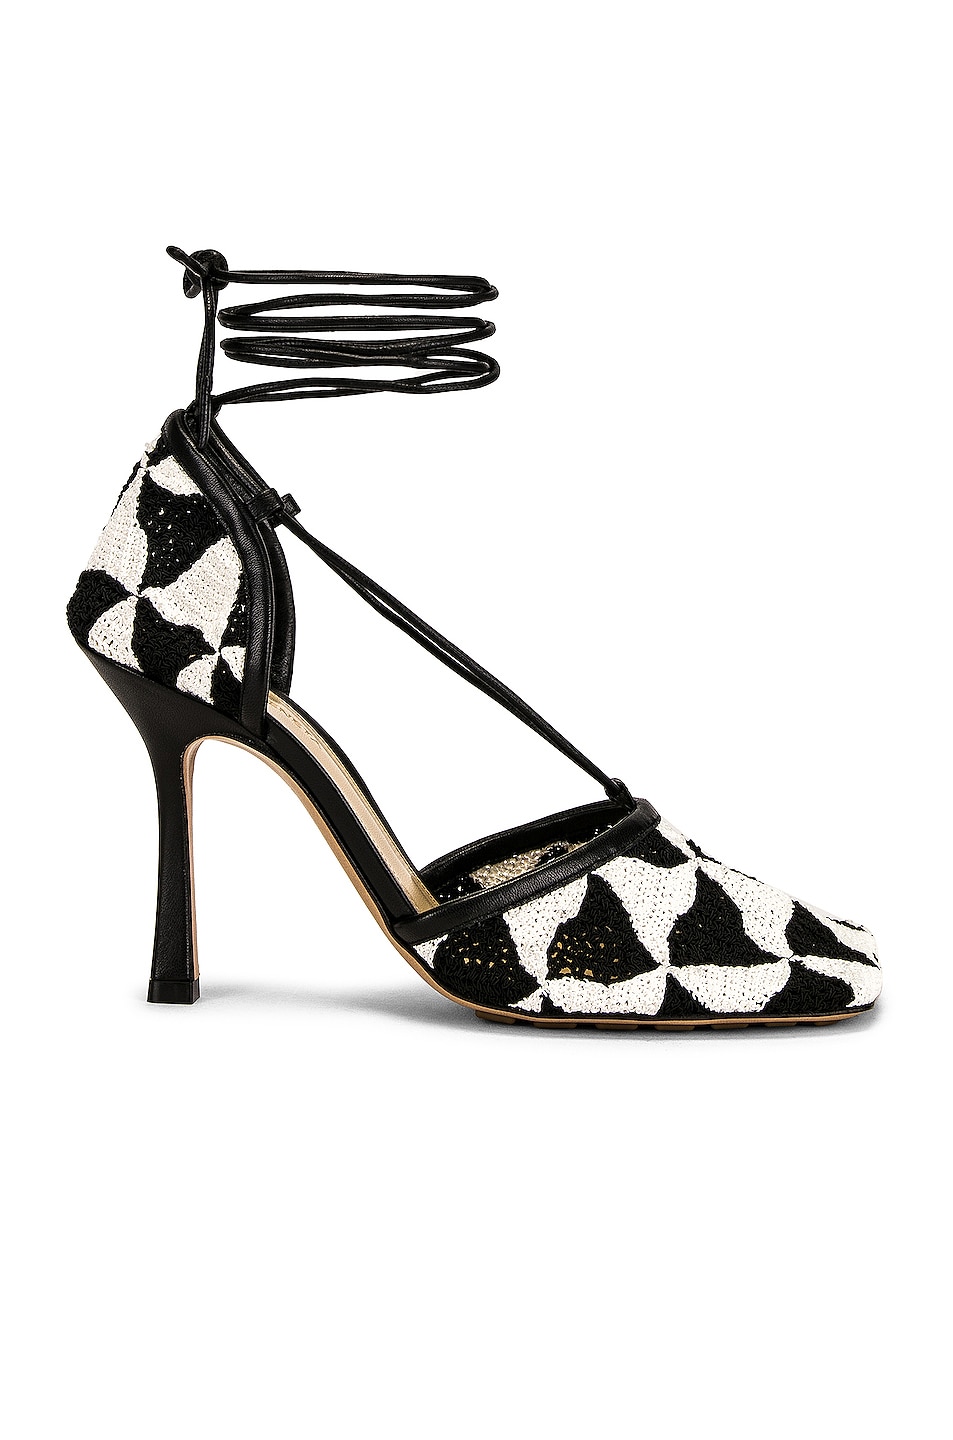 Bottega Veneta Stretch Lace Up Sandals in String & Black | FWRD